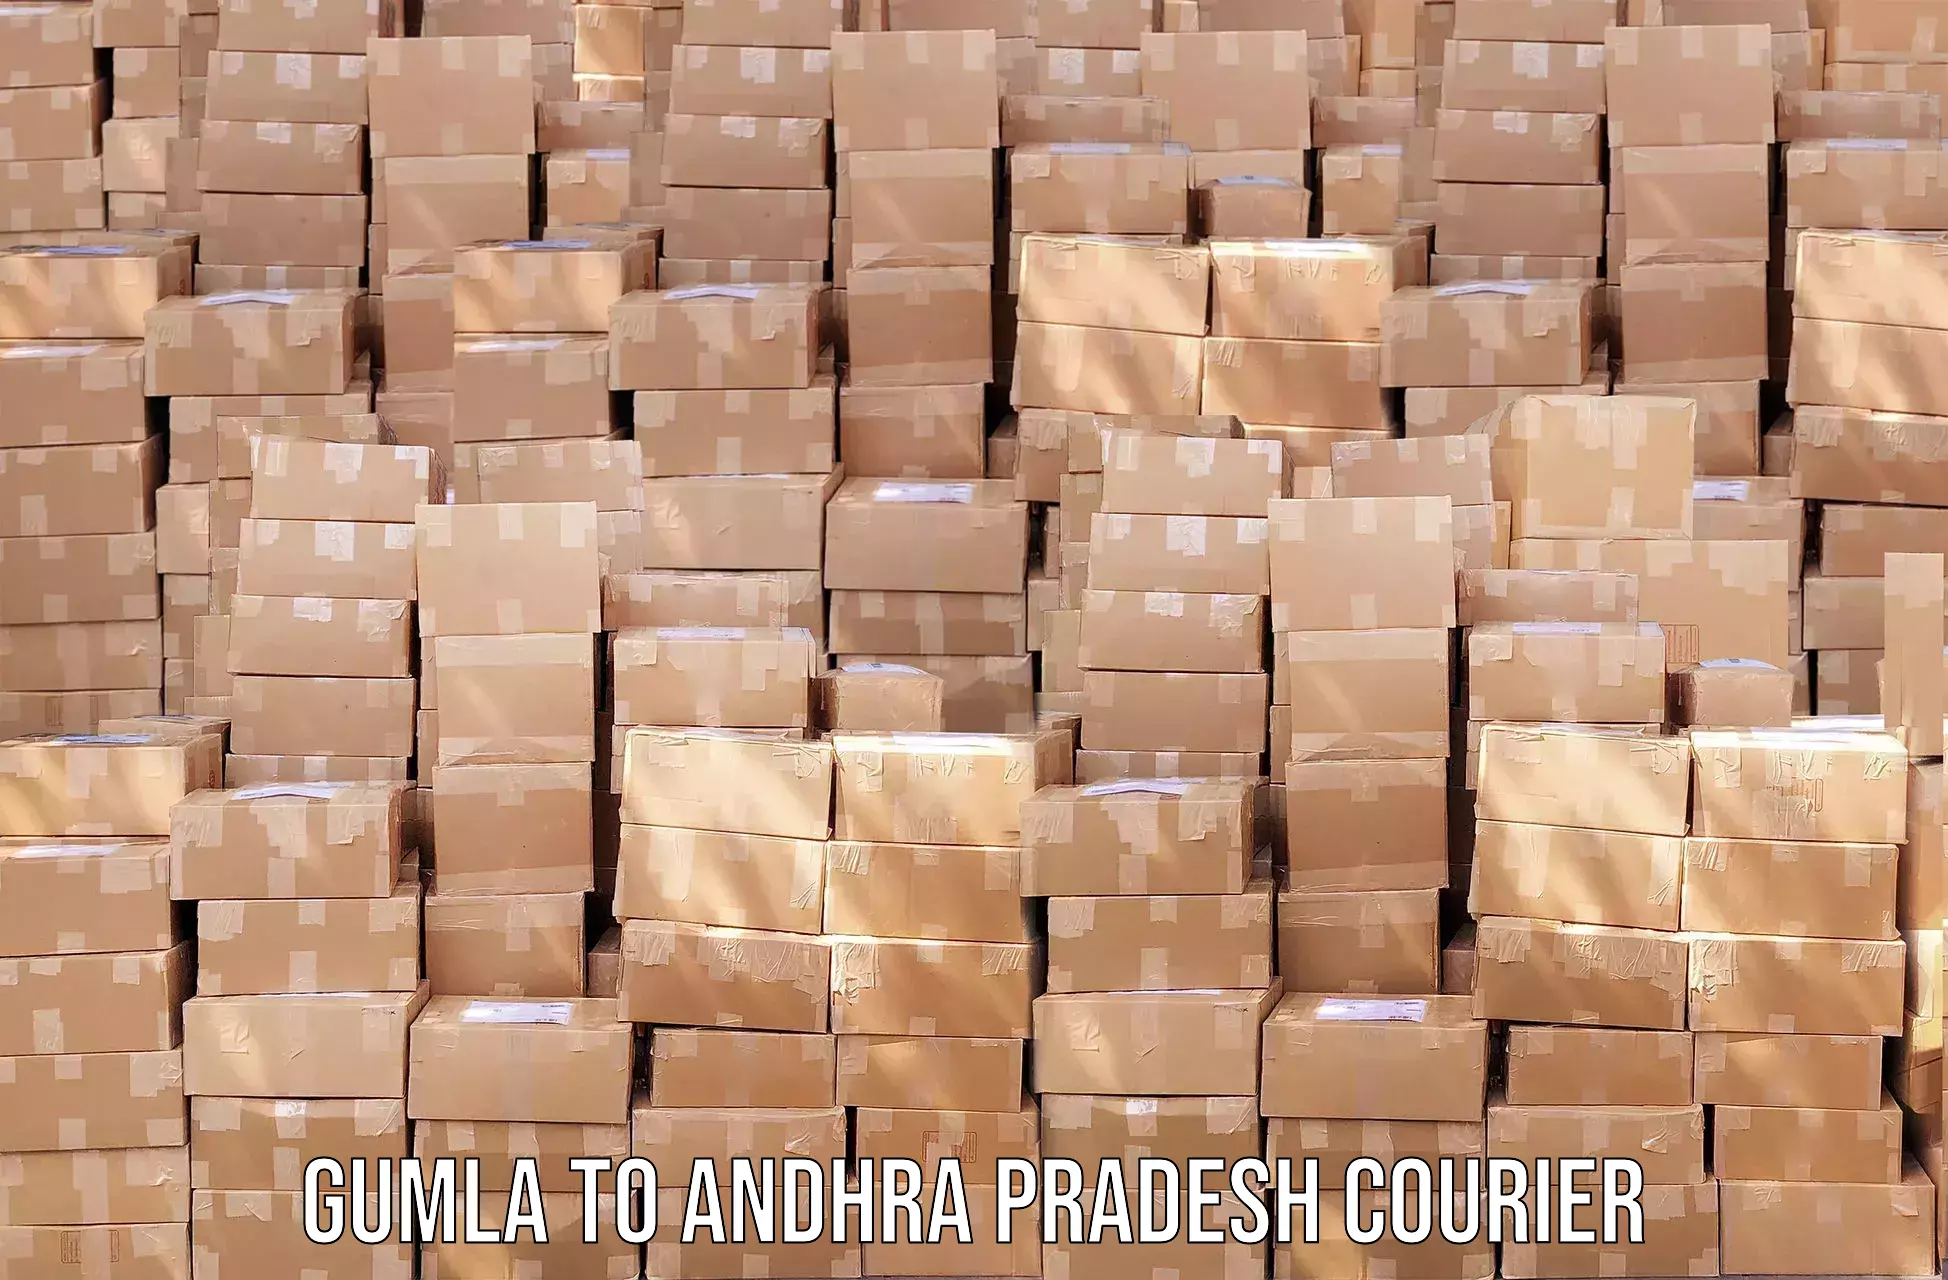 Sustainable delivery practices Gumla to Kandukur